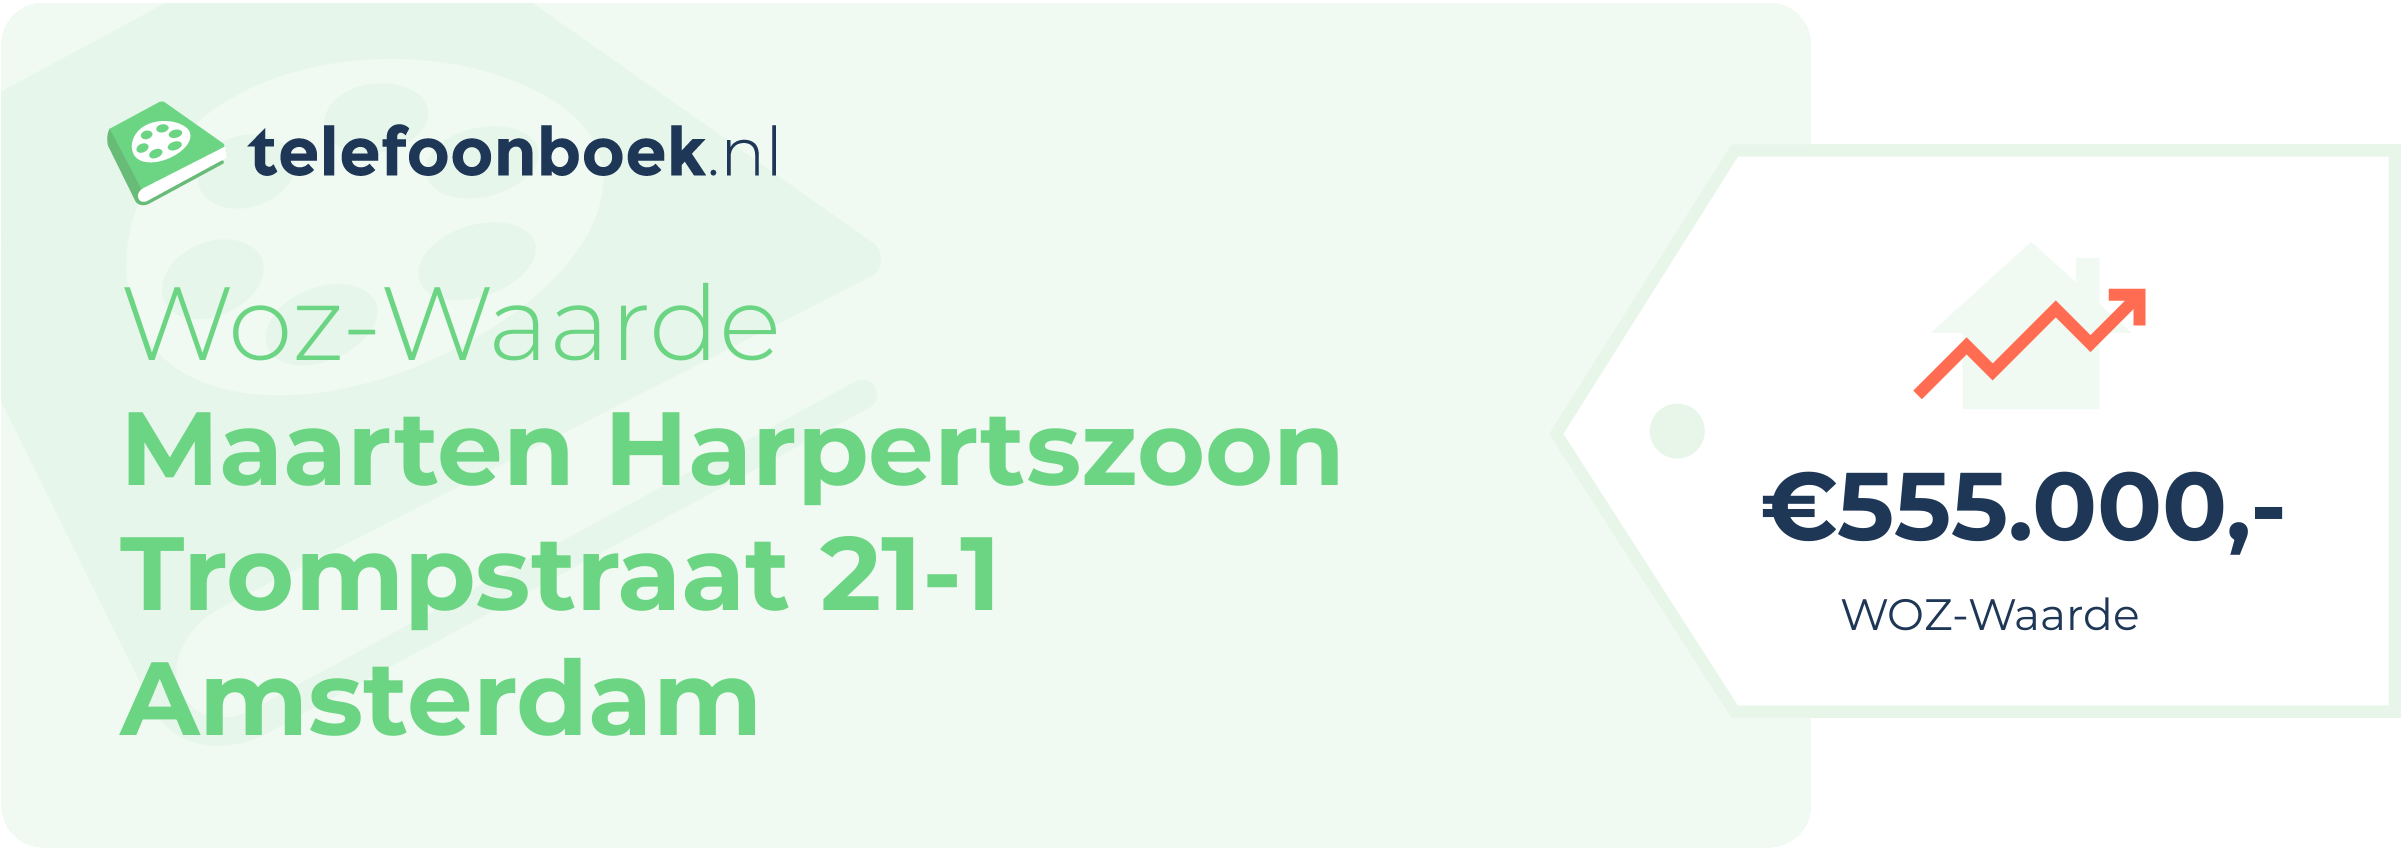 WOZ-waarde Maarten Harpertszoon Trompstraat 21-1 Amsterdam